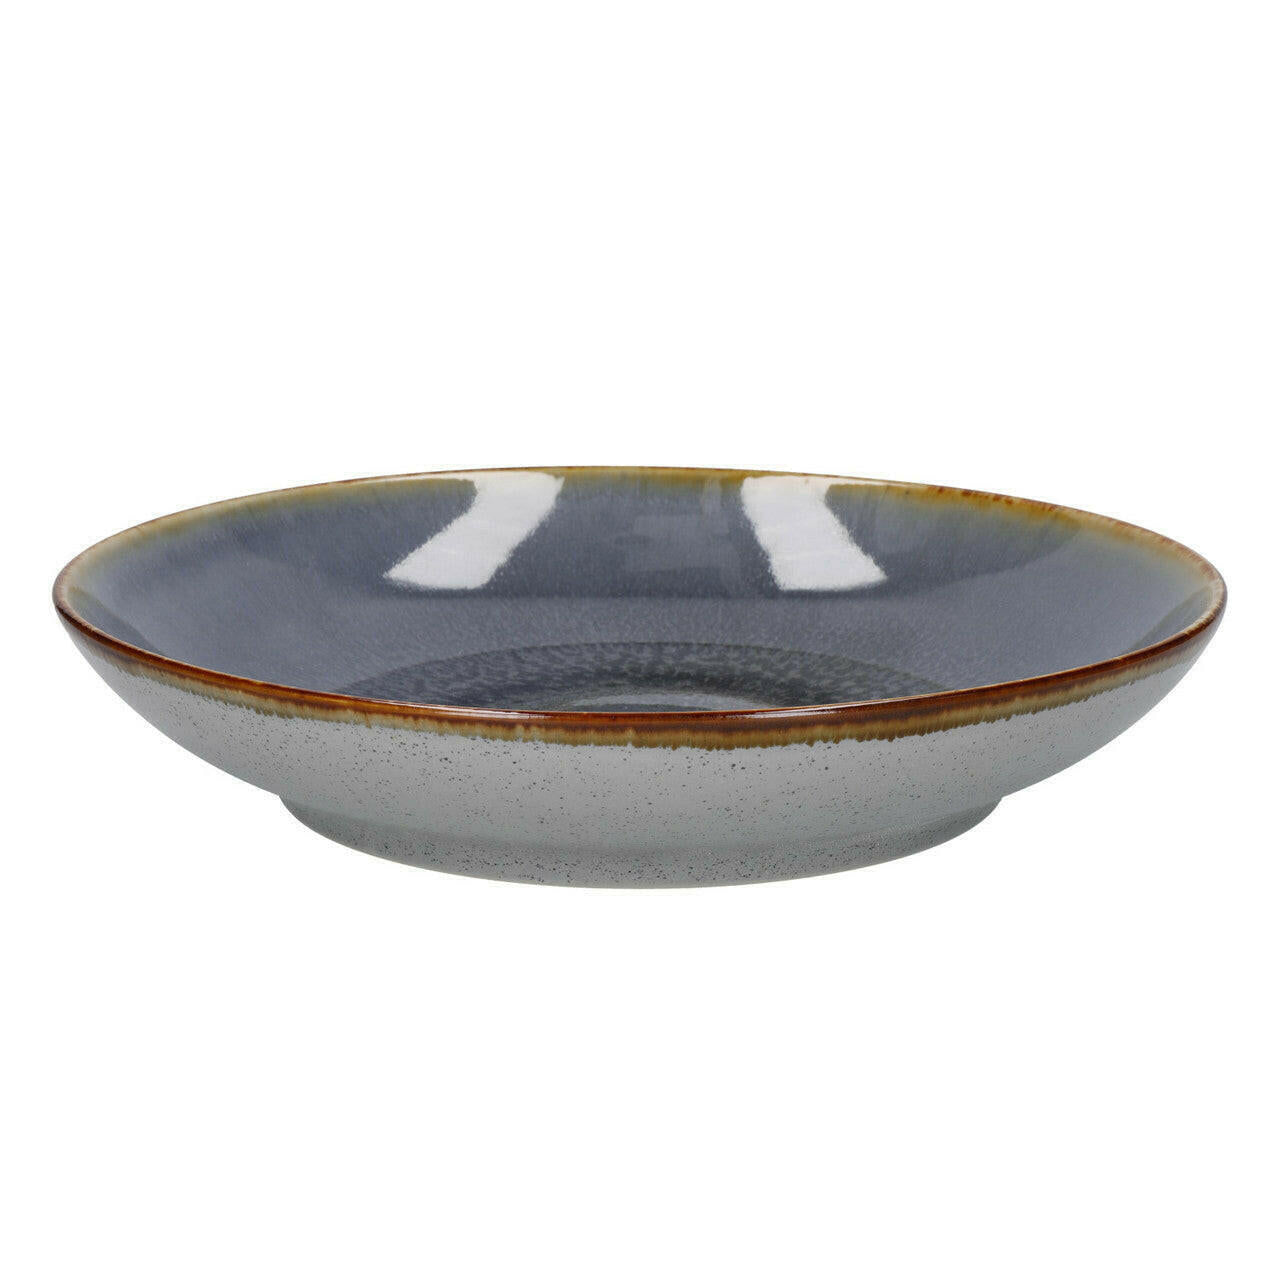 Mikasa Hospitality Impression Fossil Grey Pasta Bowl 23cm Case Size 6